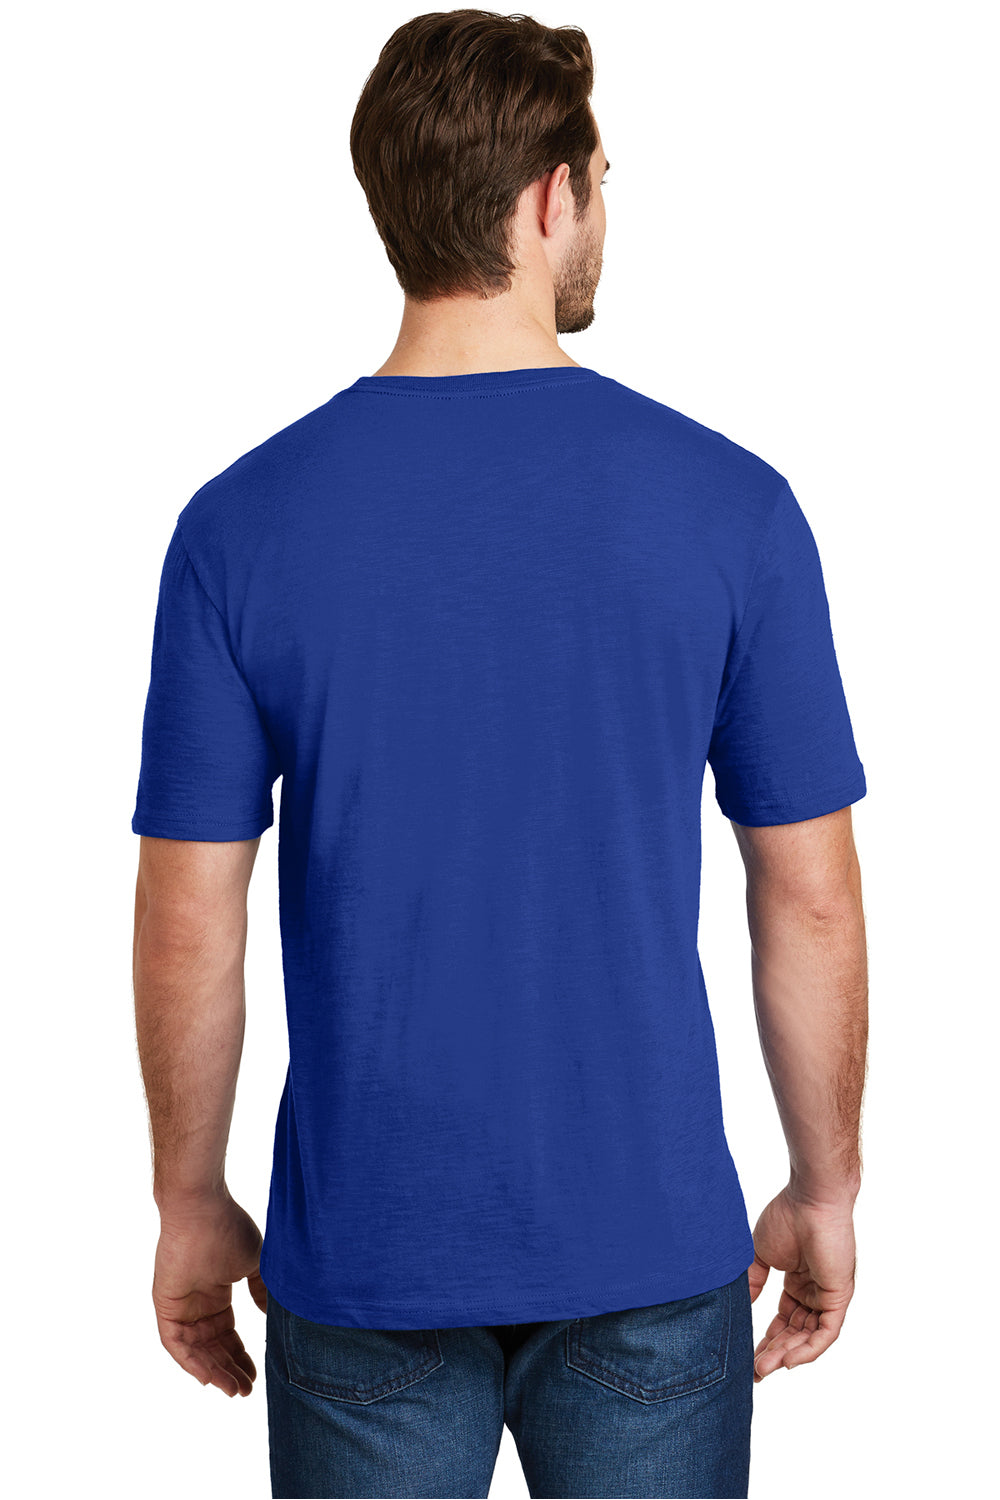 District DM3000 Mens Super Slub Short Sleeve Crewneck T-Shirt Royal Blue Back